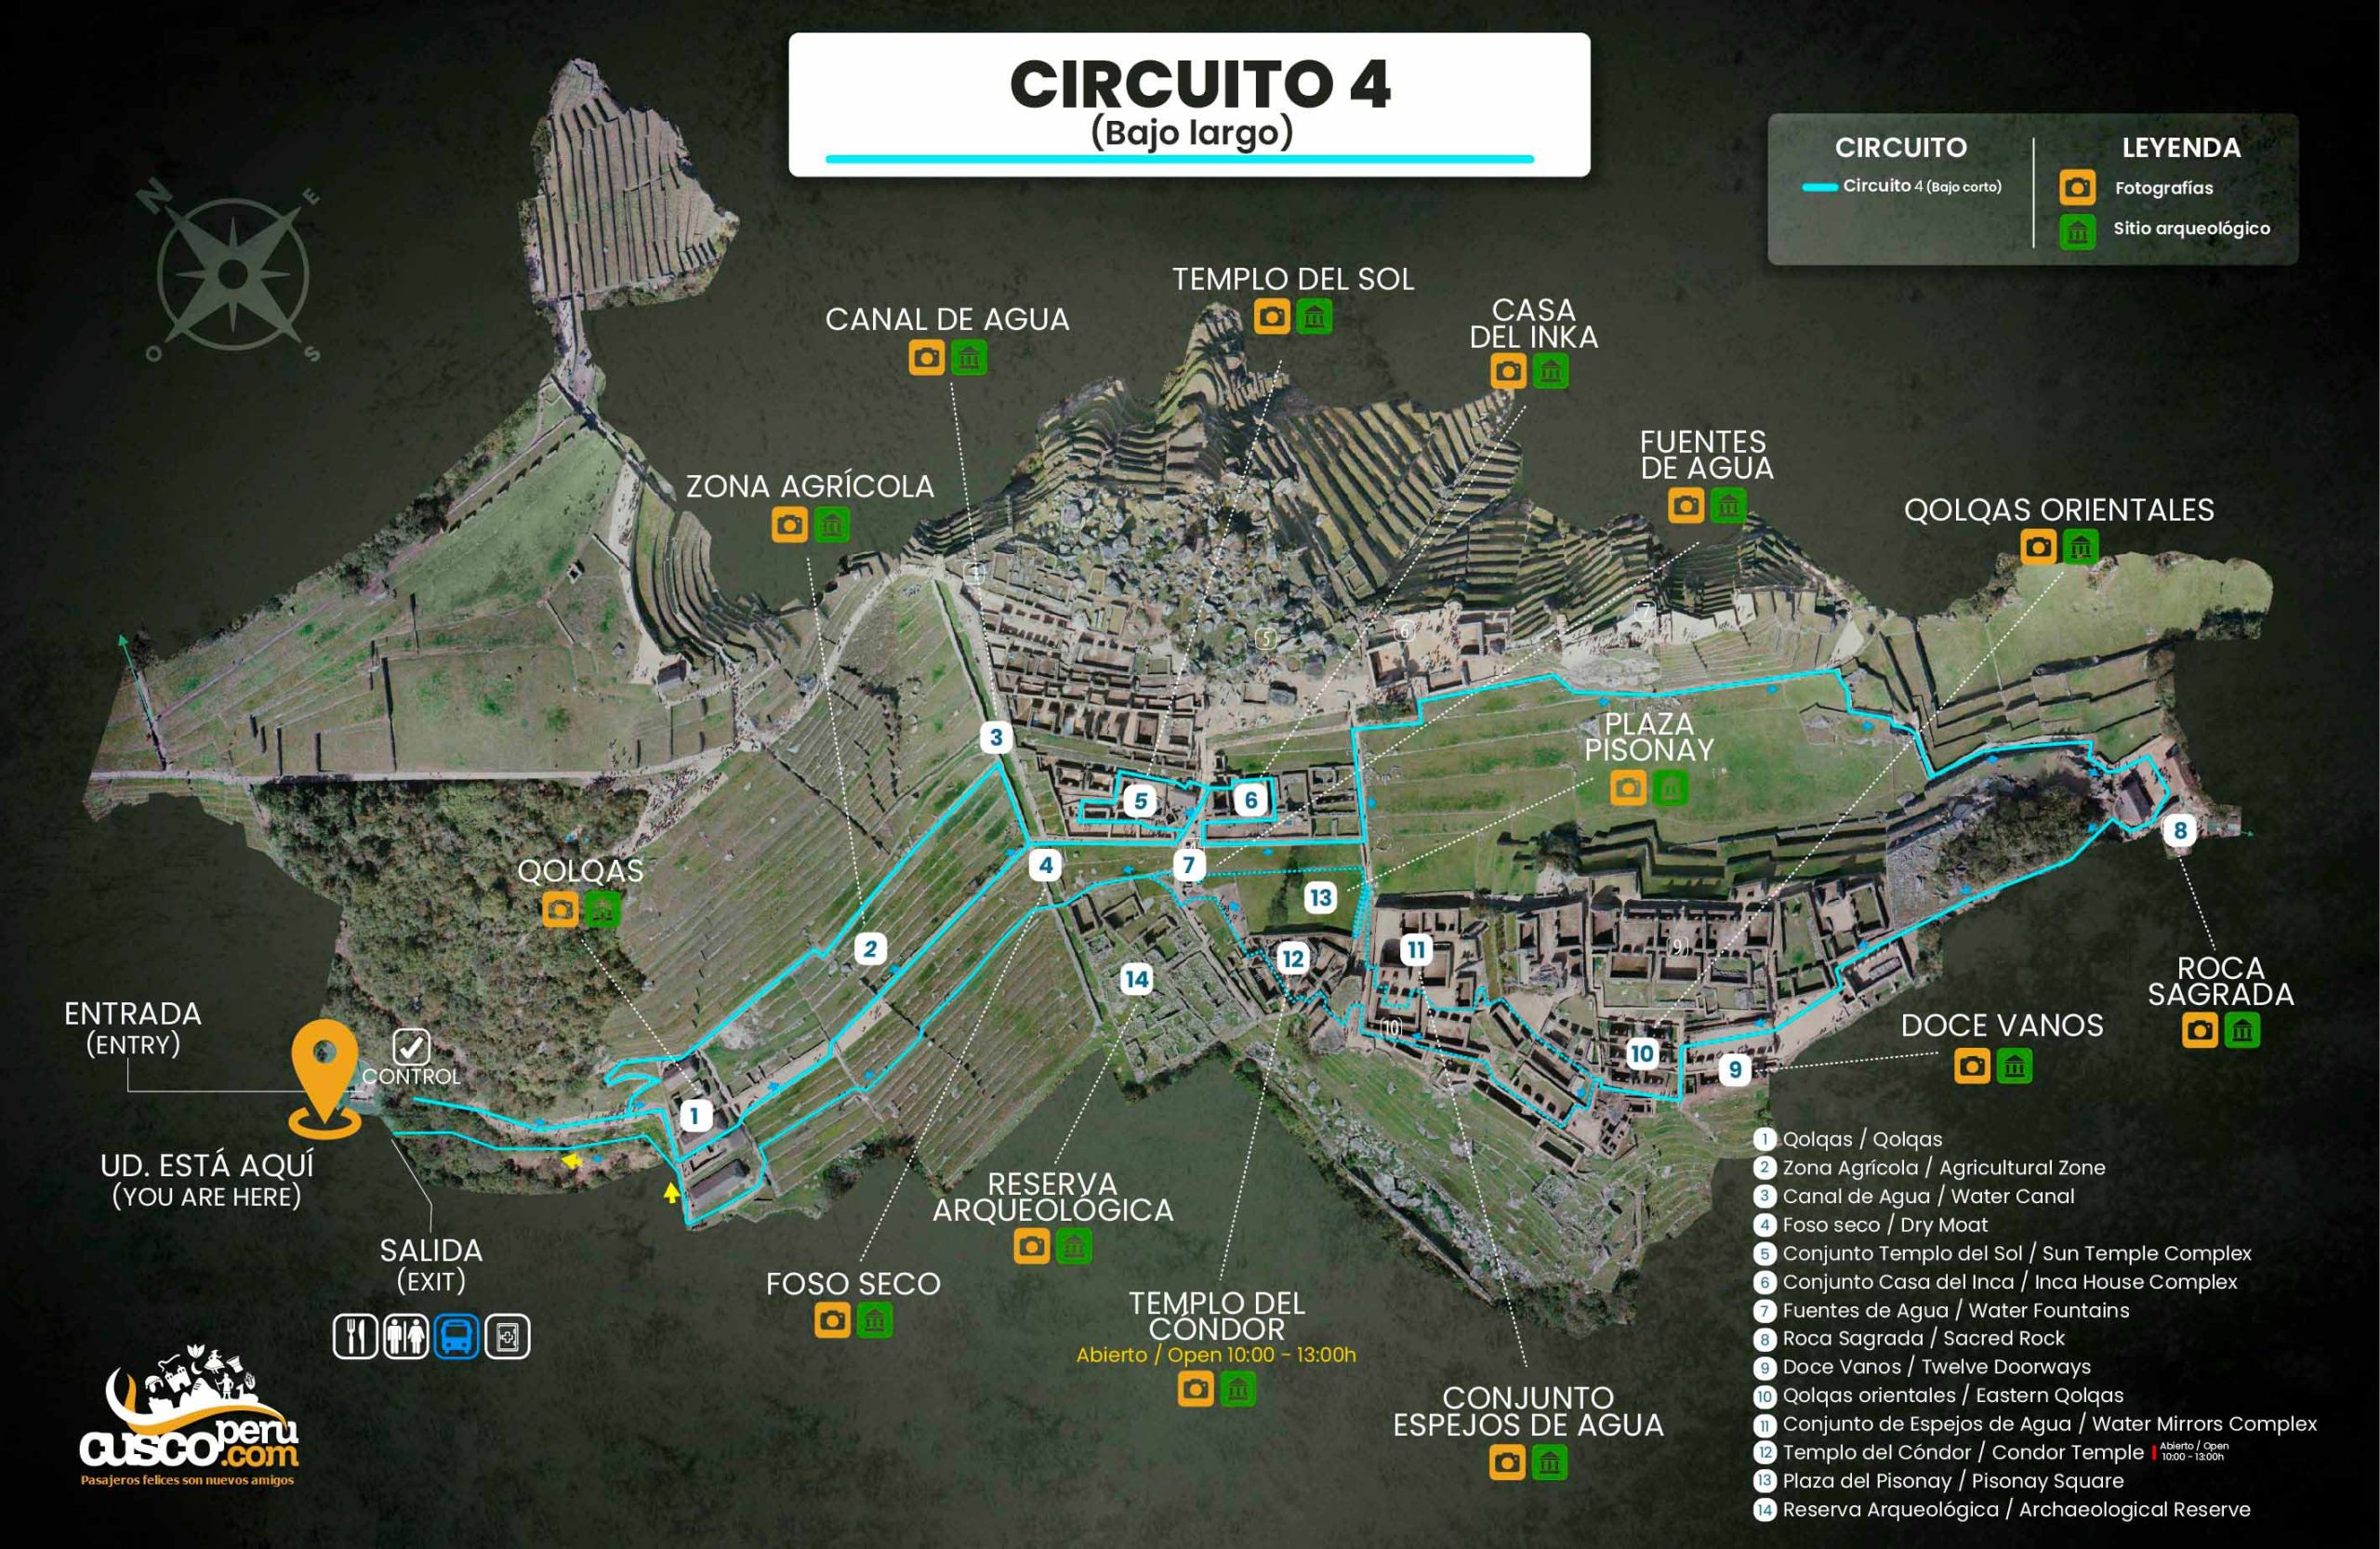 Mapa do Circuito 4 em Machu Picchu. Fonte: CuscoPeru.com